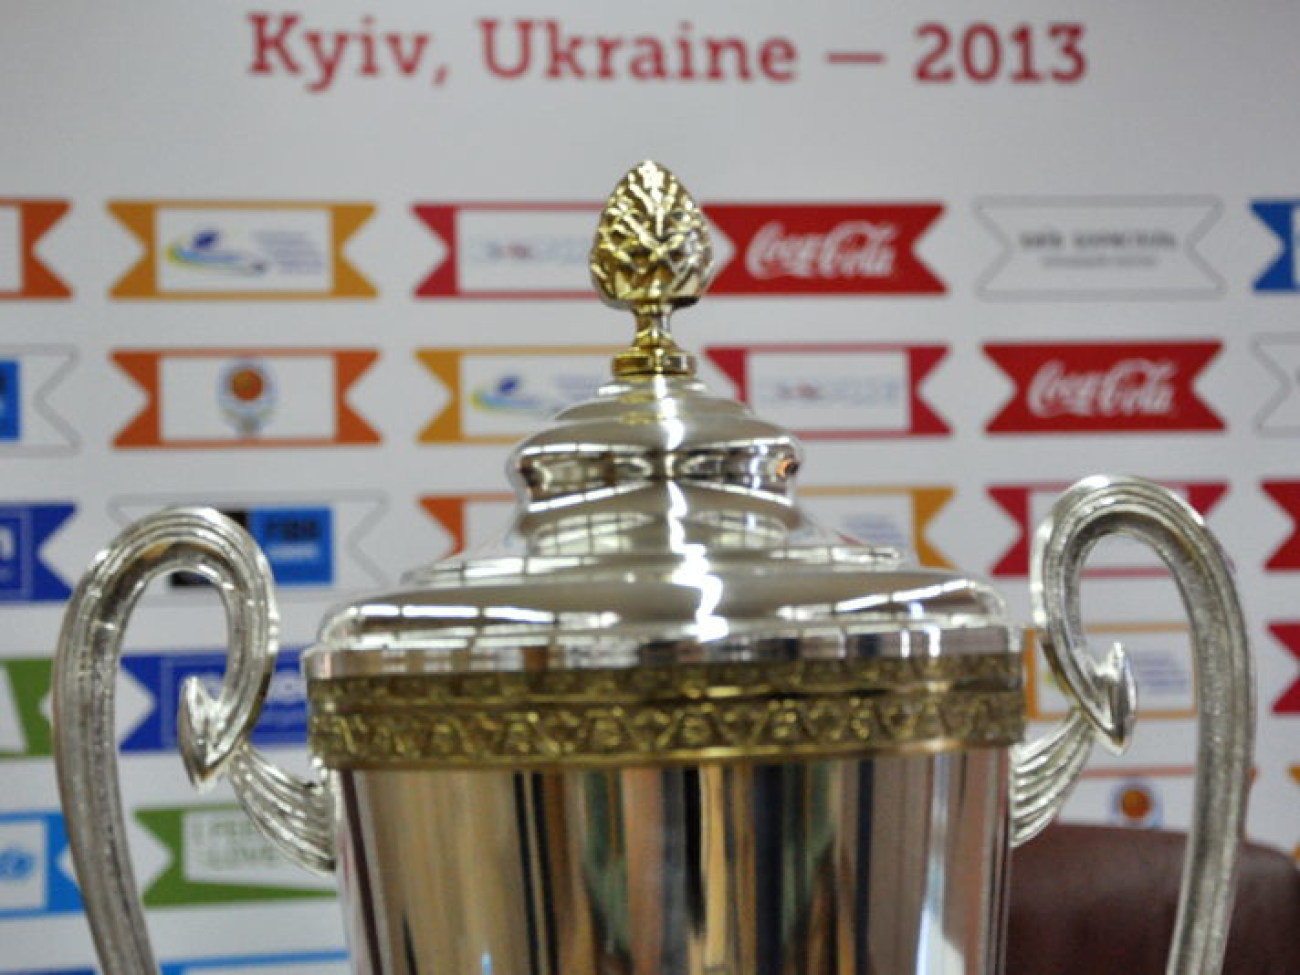 В Киеве представили Кубок Чемпионата Европы по баскетболу среди мужчин, 8 августа 2013г.